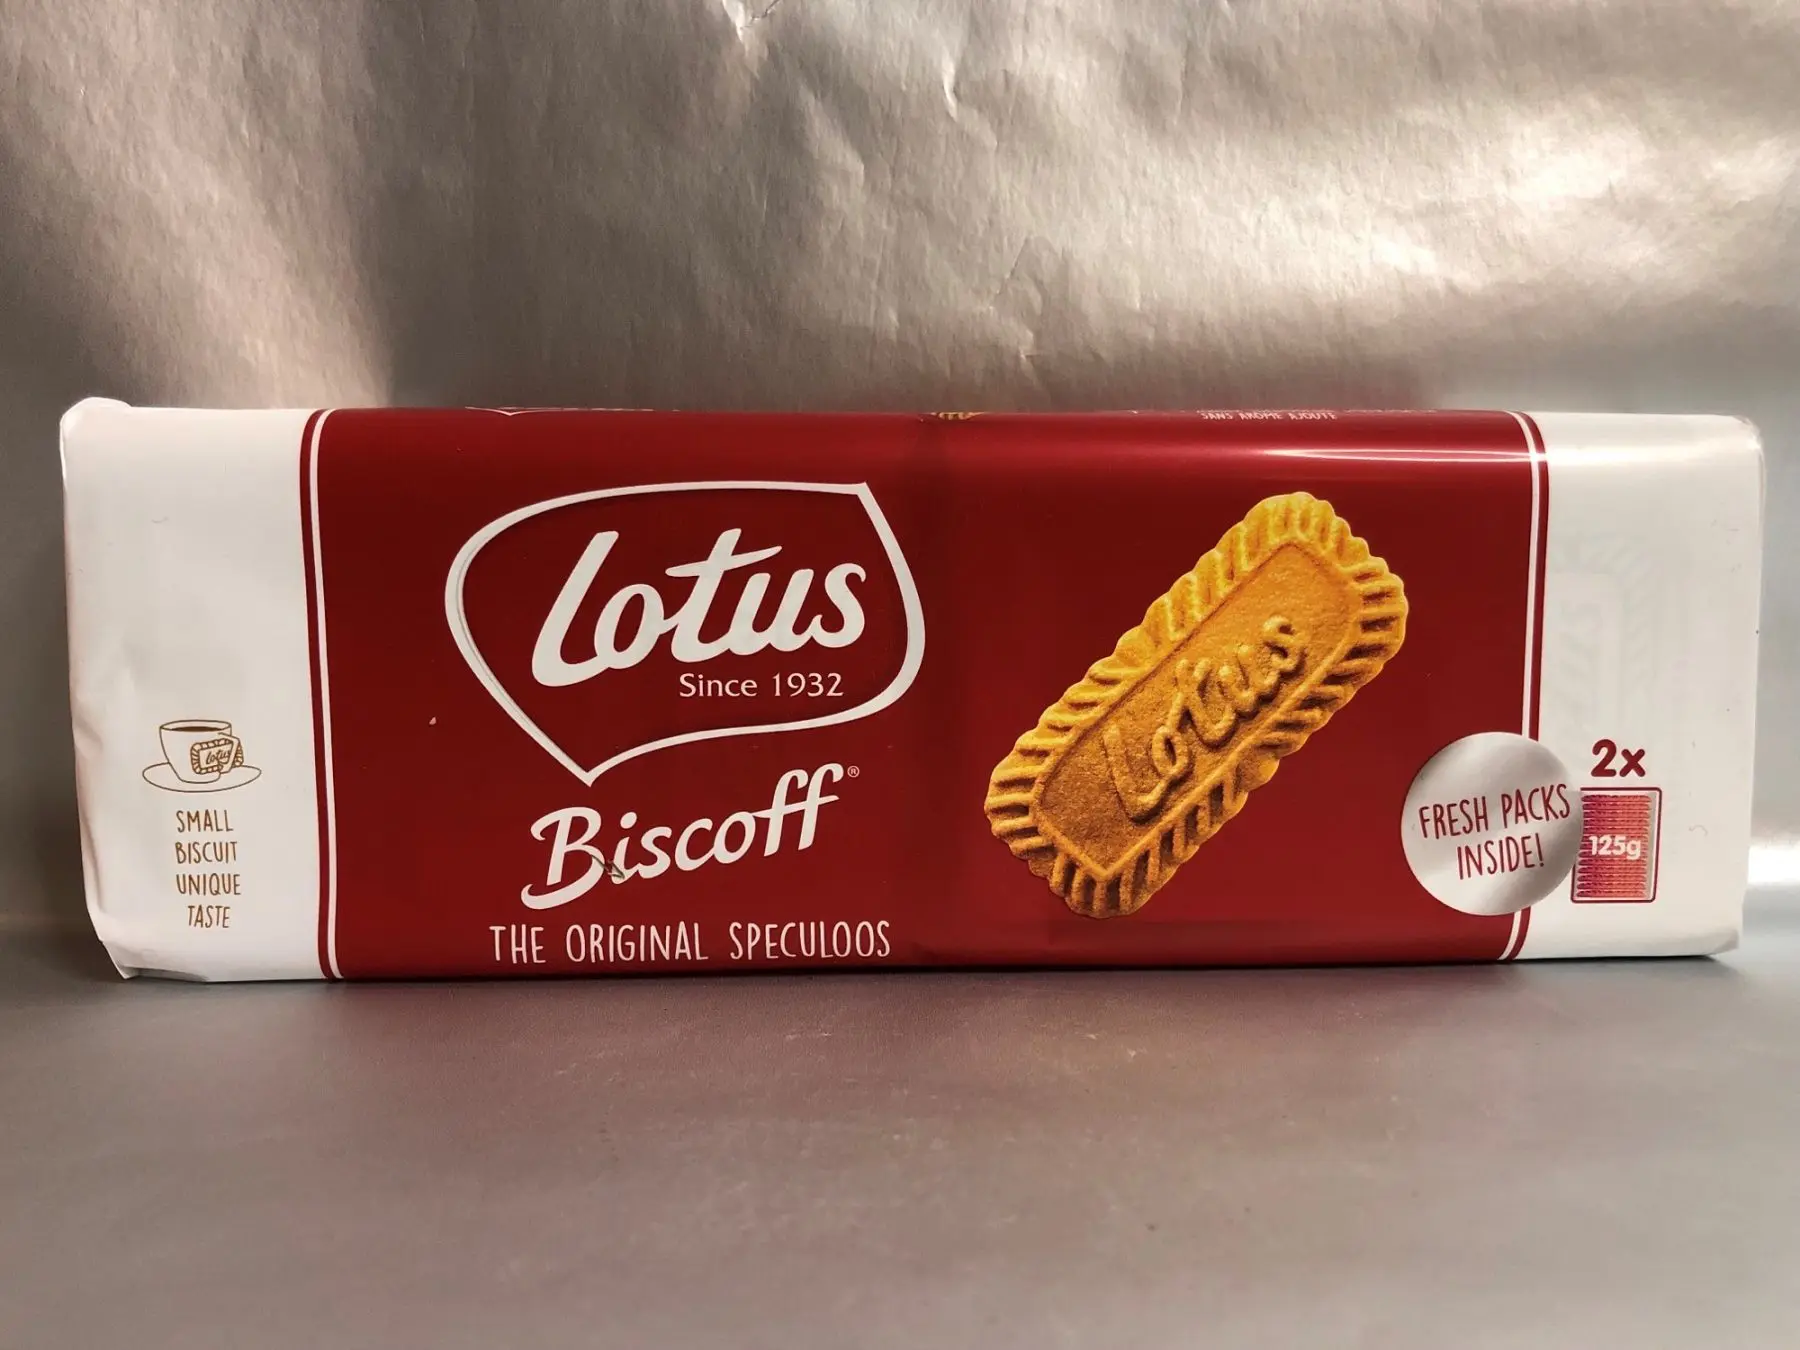 Lotus speculoos biscuits